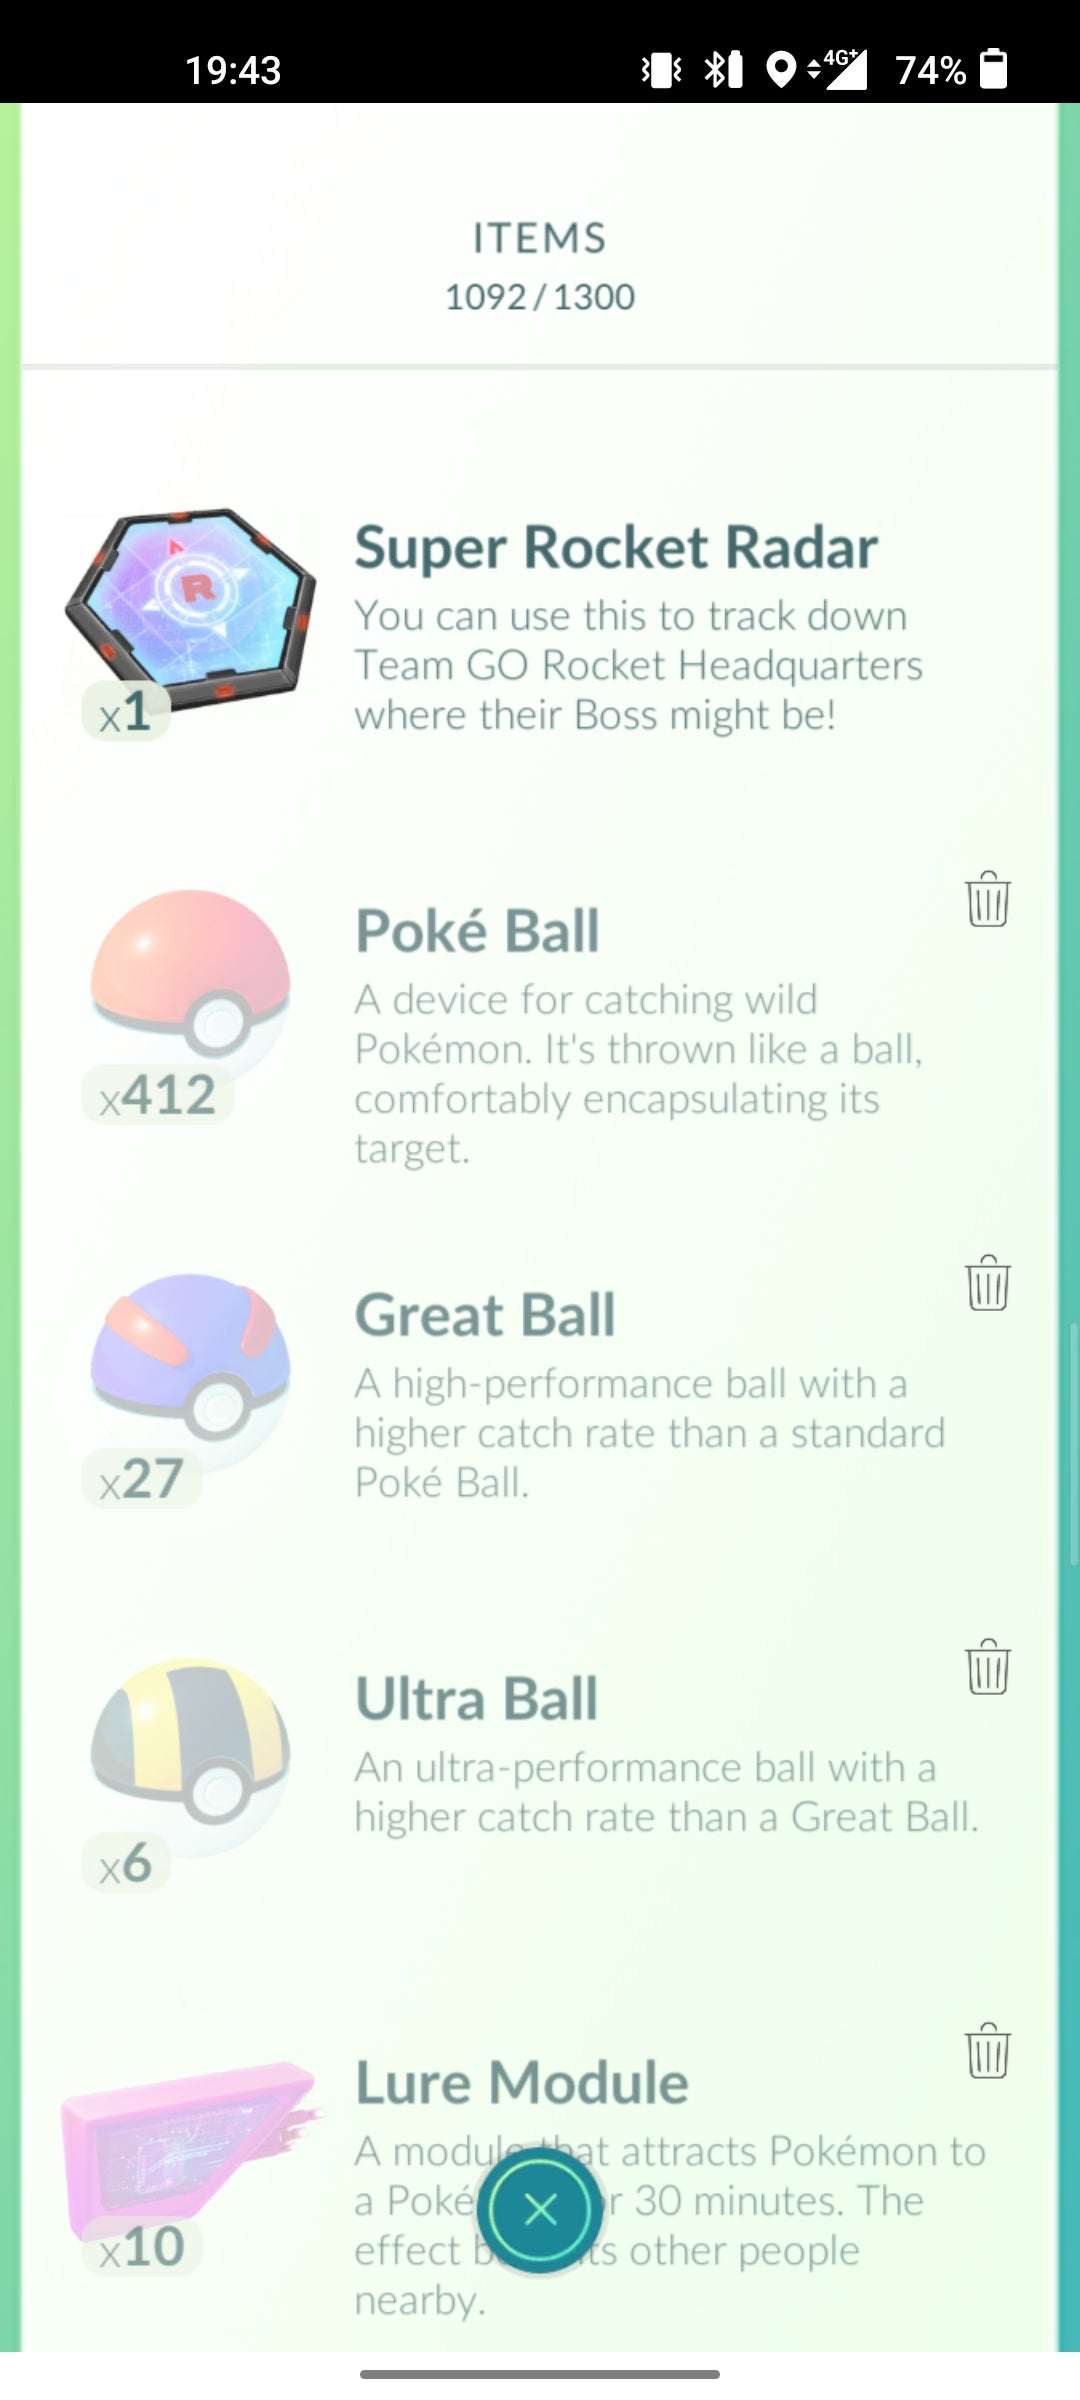 Pokémon Go Pokéball item description